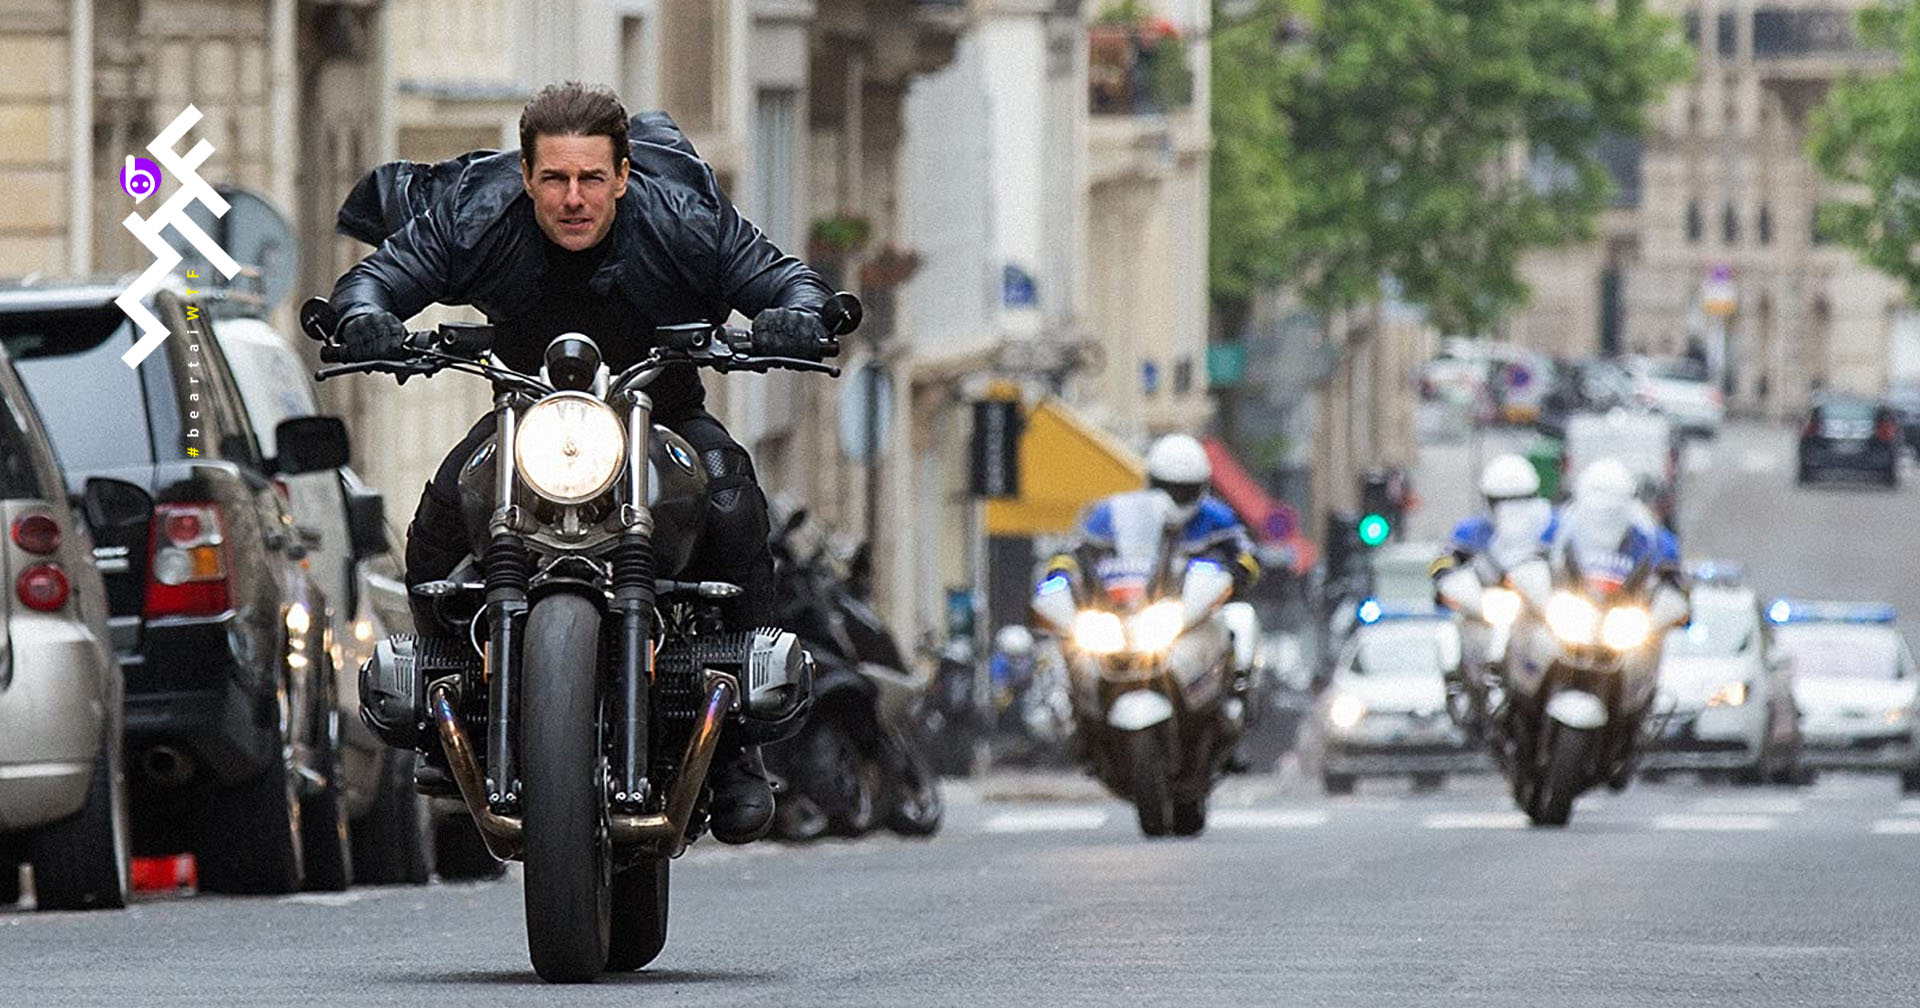 Tom Cruise เป็น "บุคคล VIP" ไม่ต้องกักตัวเมื่อเดินทางกลับไปถ่าย Mission Impossible ในอังกฤษ